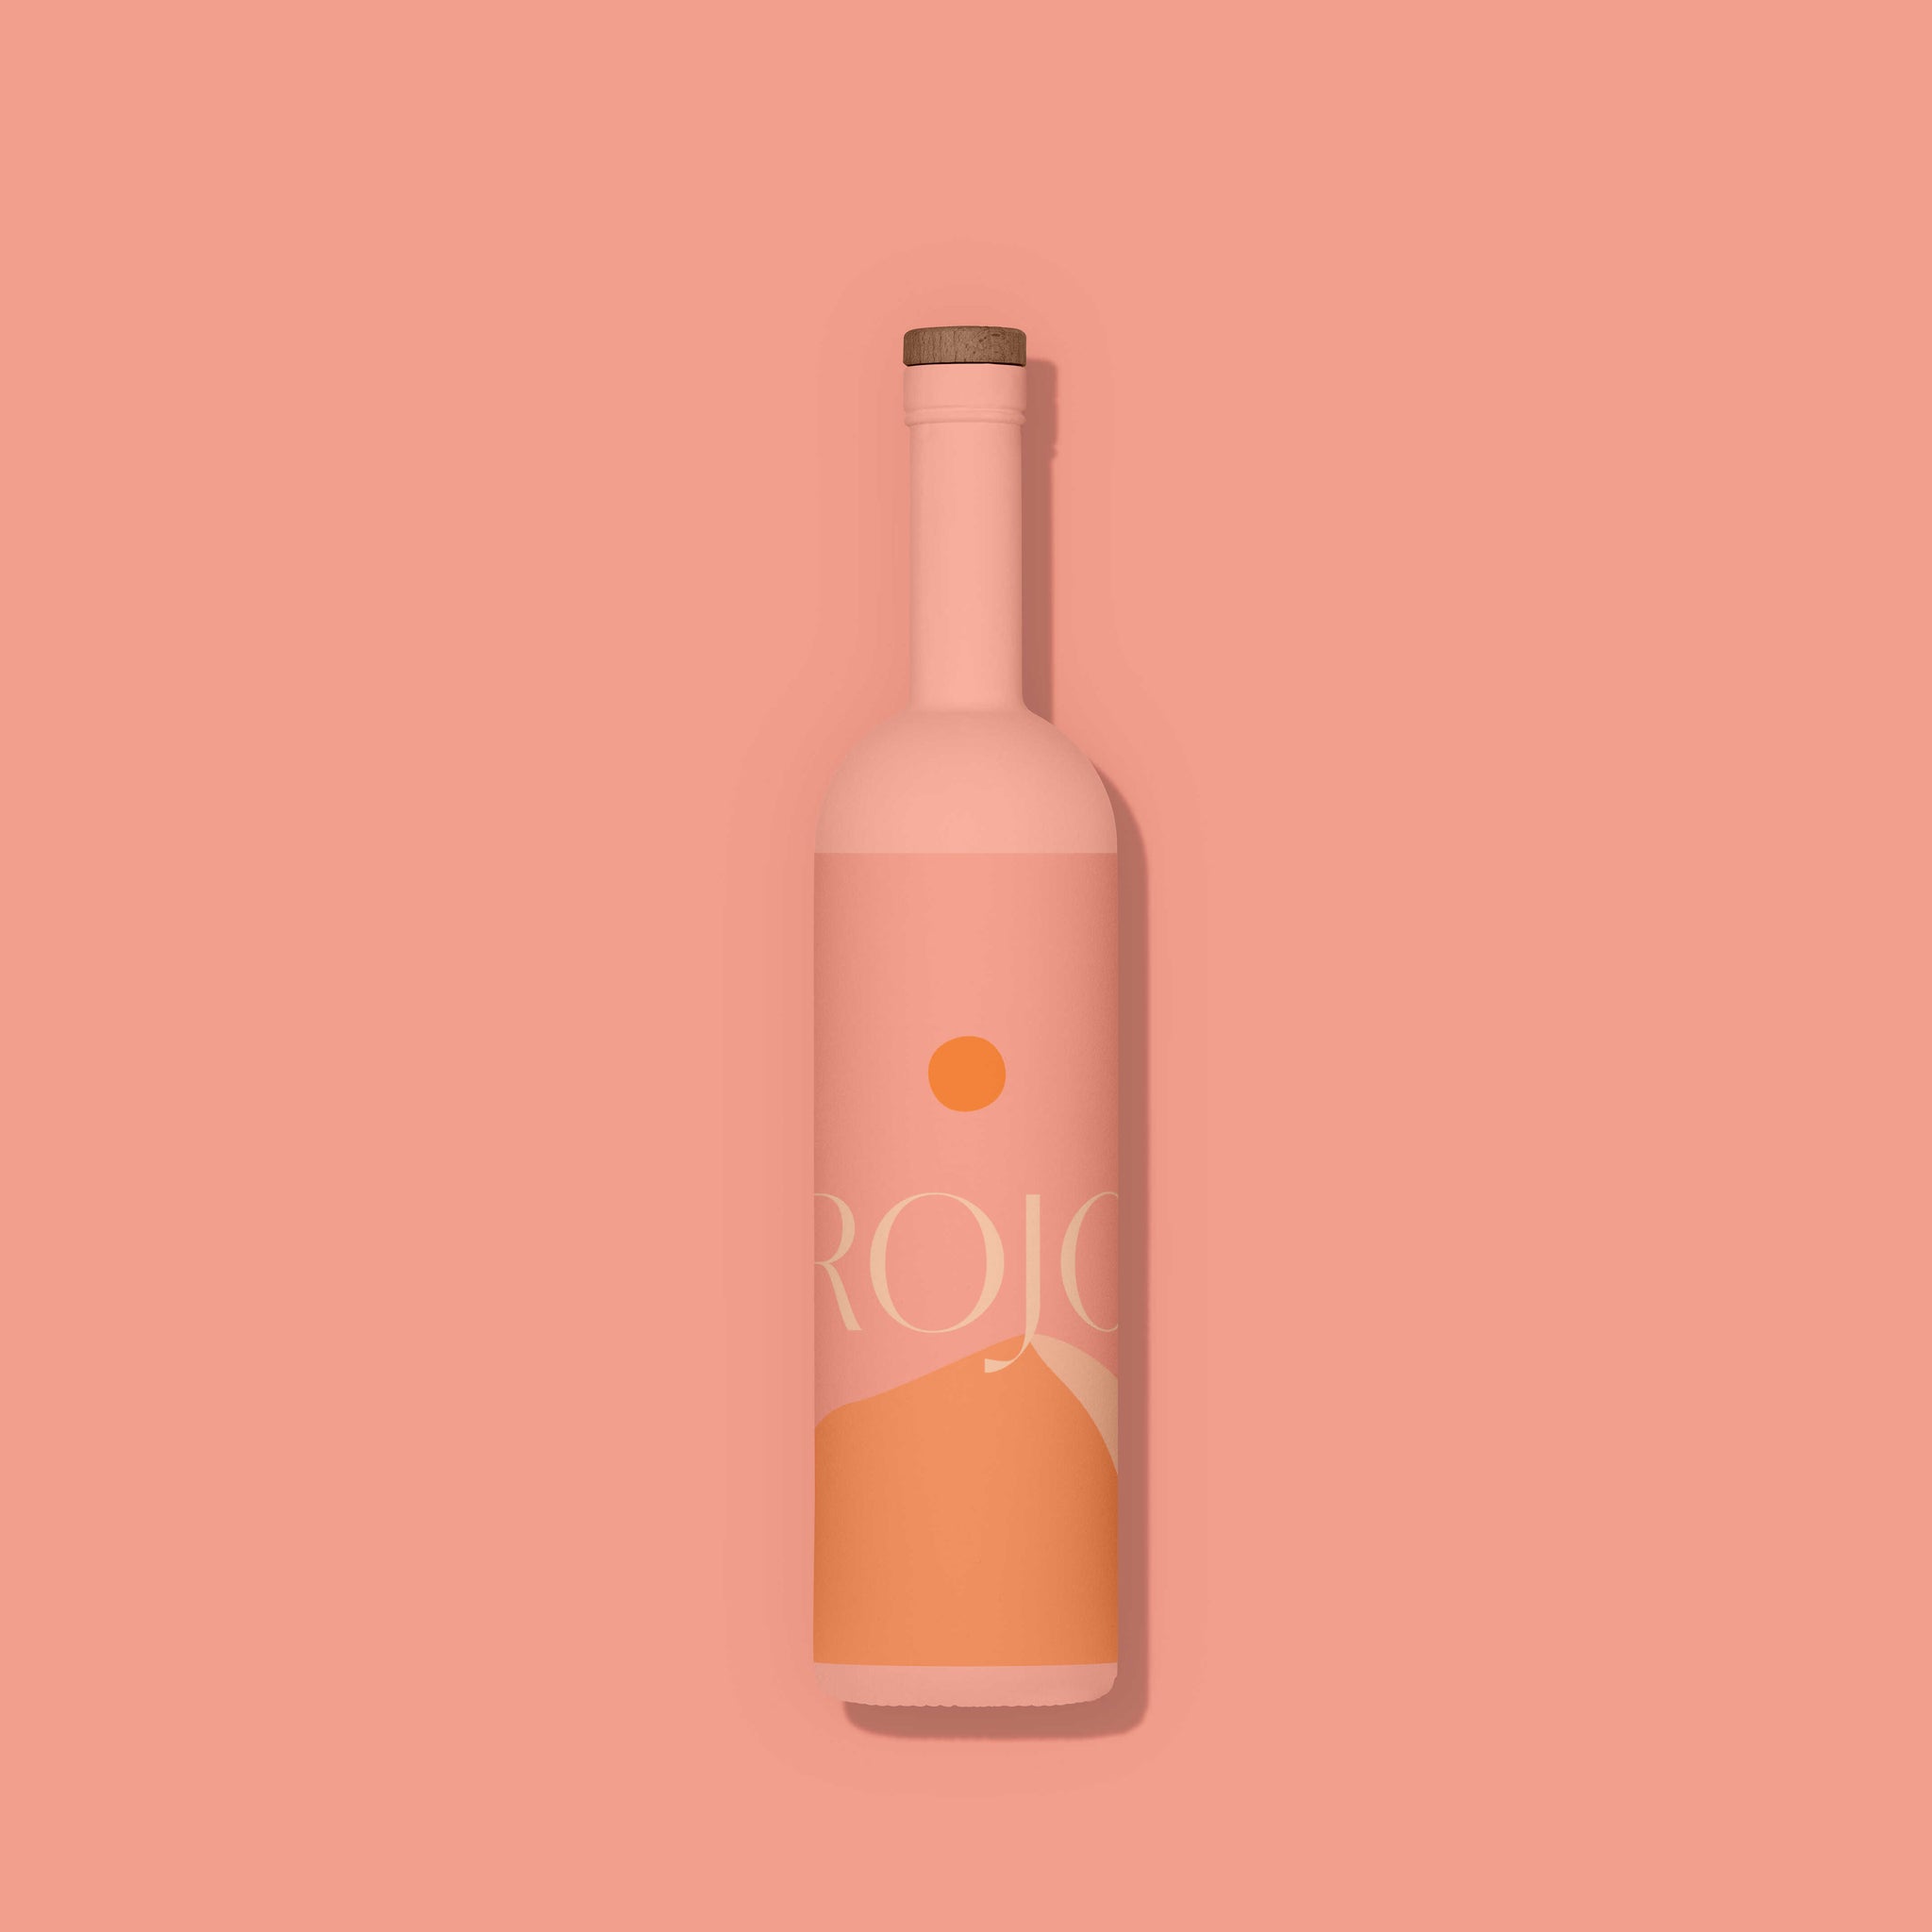 Ceramic Liquor Bottle Mockup - Copal Studio Packaging Mockups For Designers